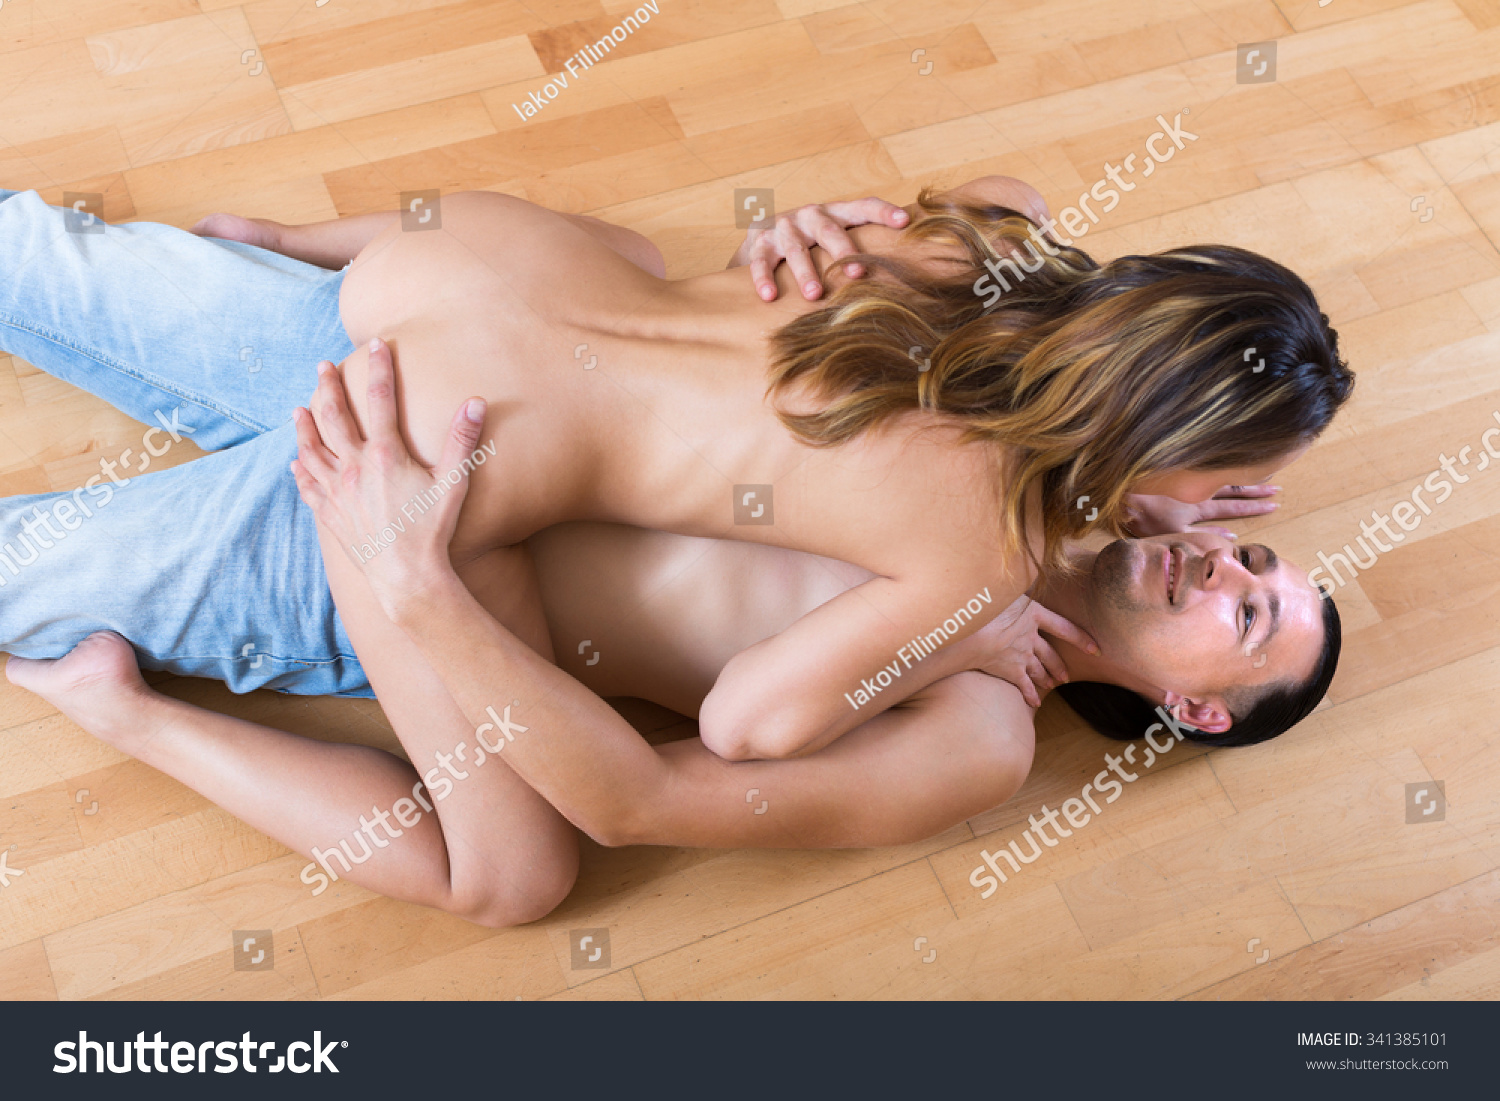 Man And Woman Having Hot Sex